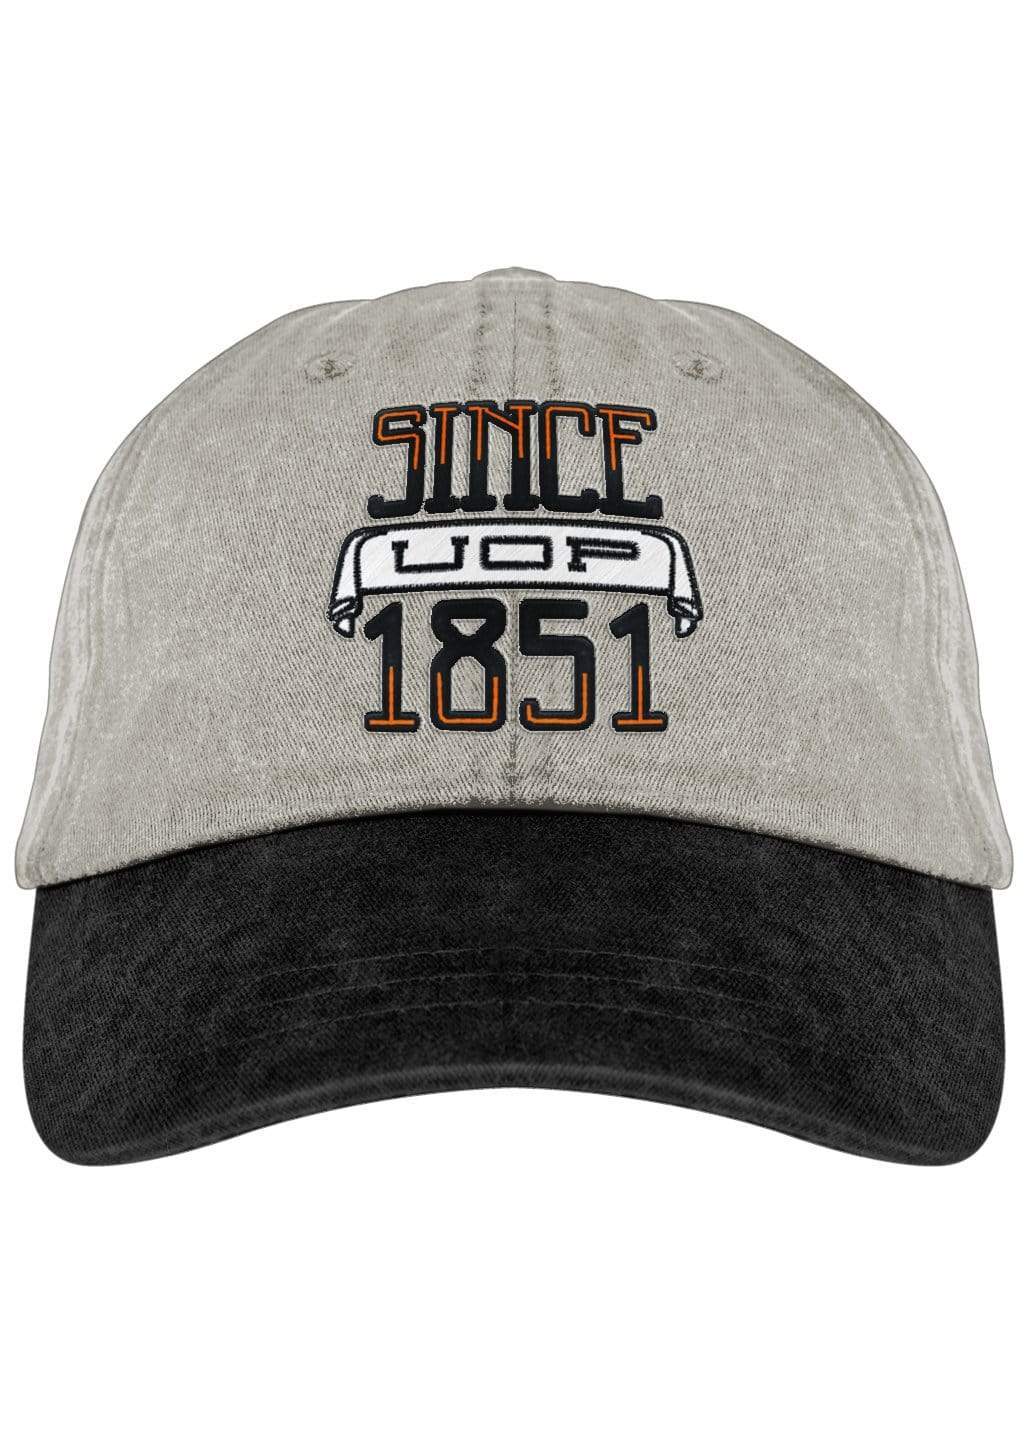 University of the Pacific Tigers Since 1851 Fadeaway Cap Hat by Zeus Collegiate